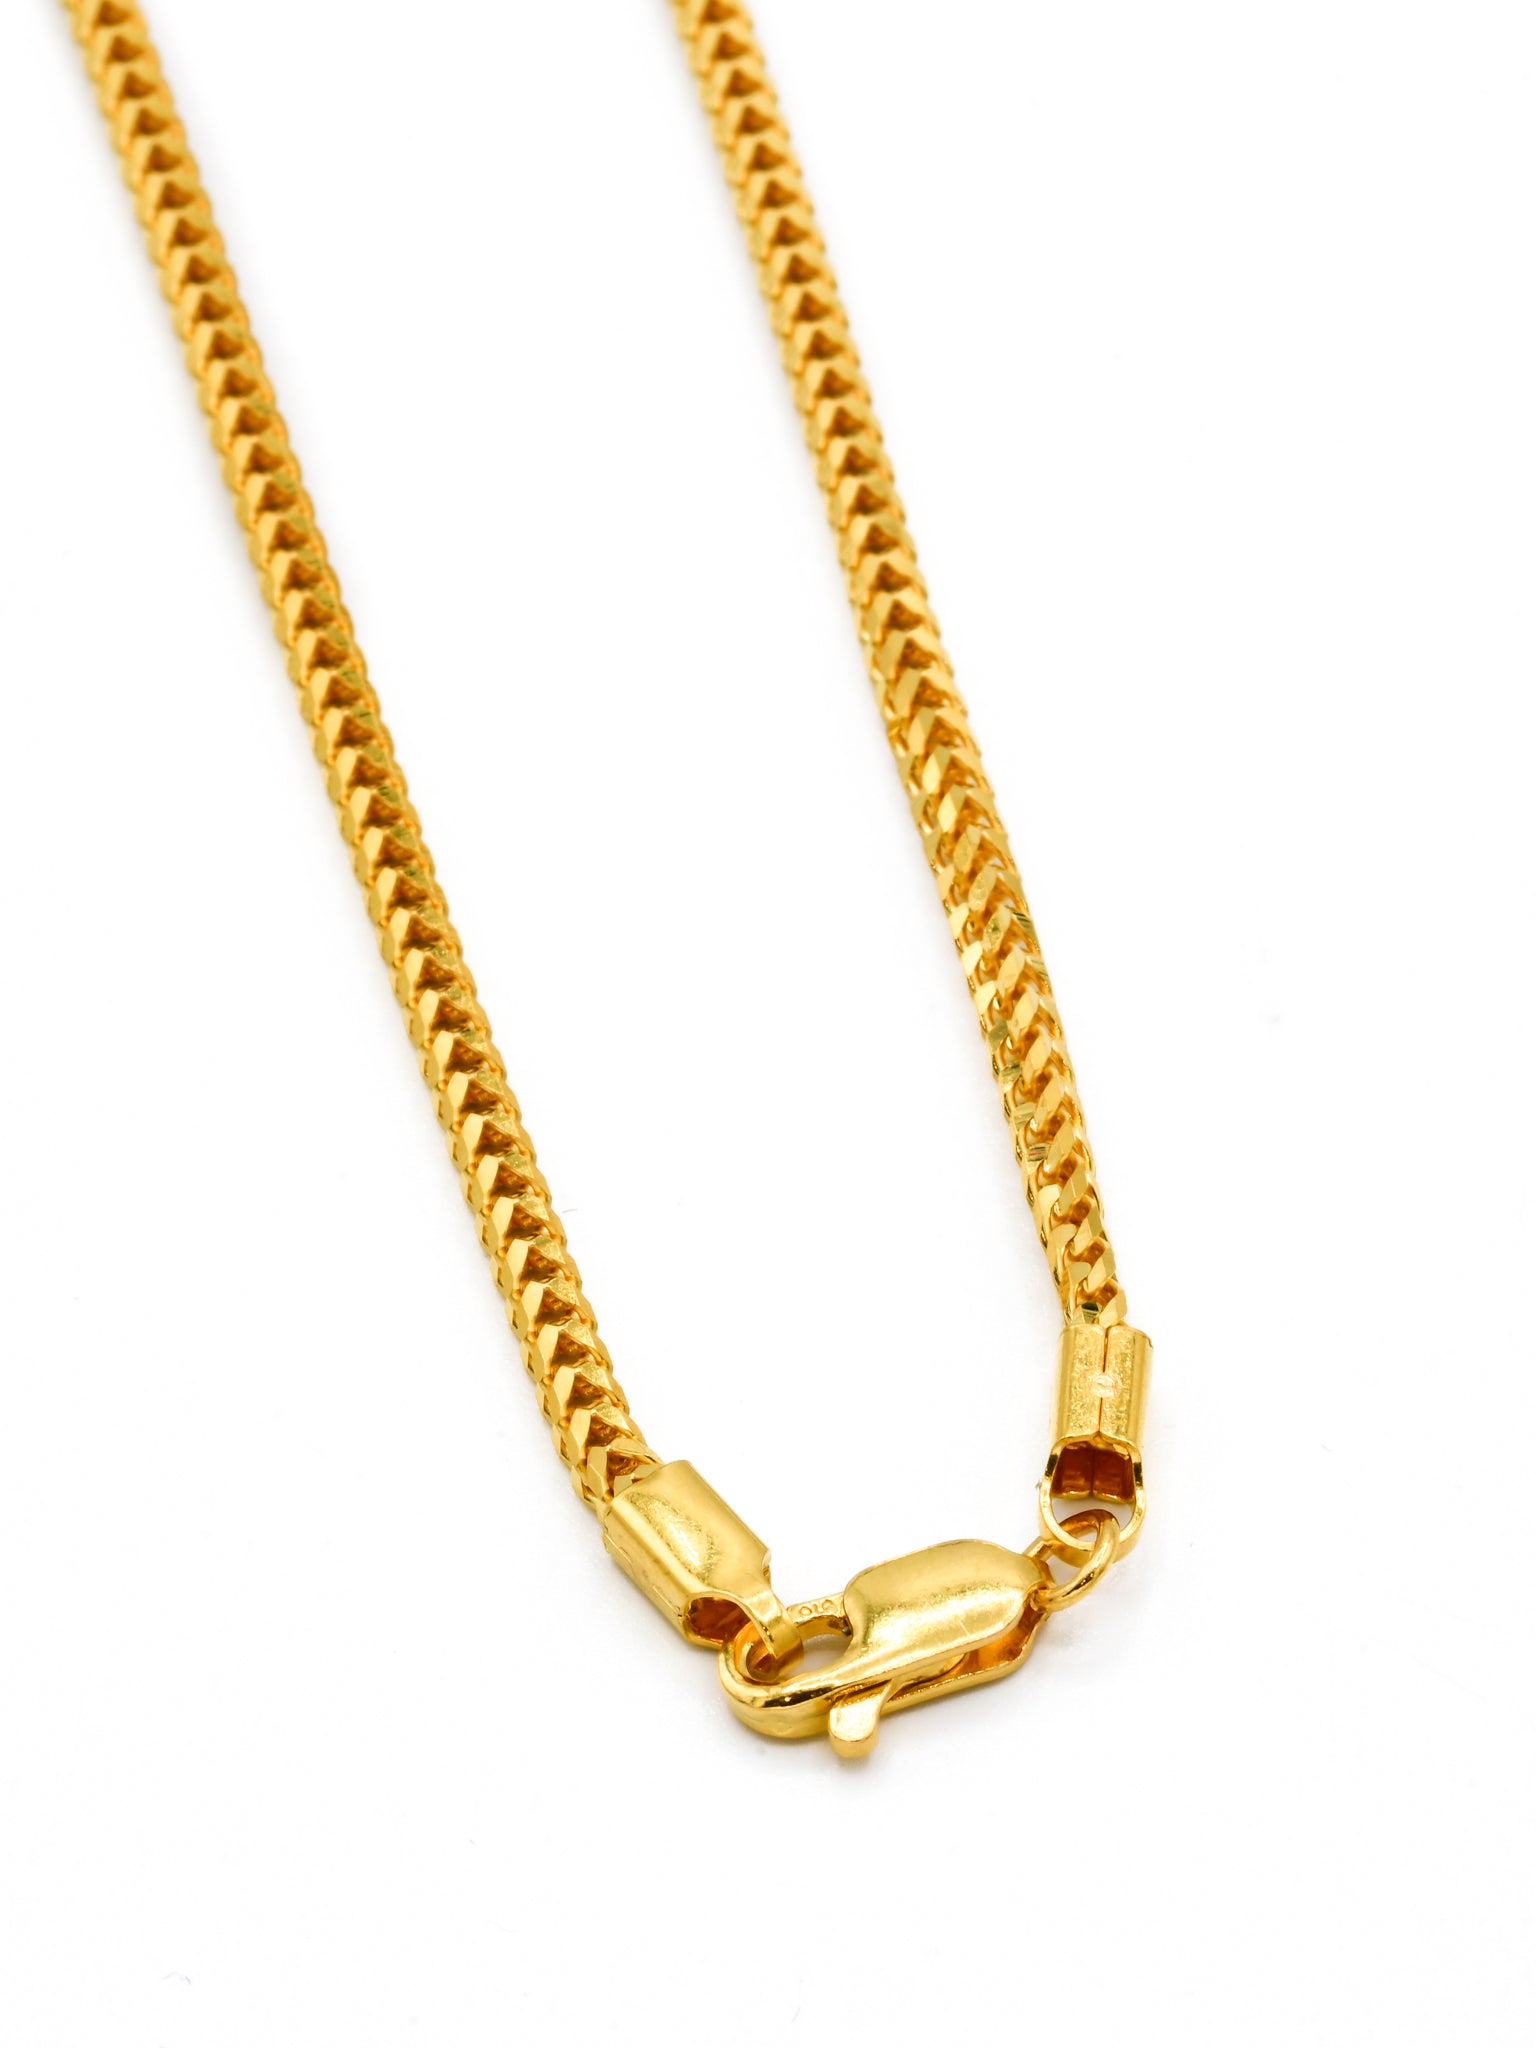 22ct Gold Fox Tail Chain - 65cm - Roop Darshan